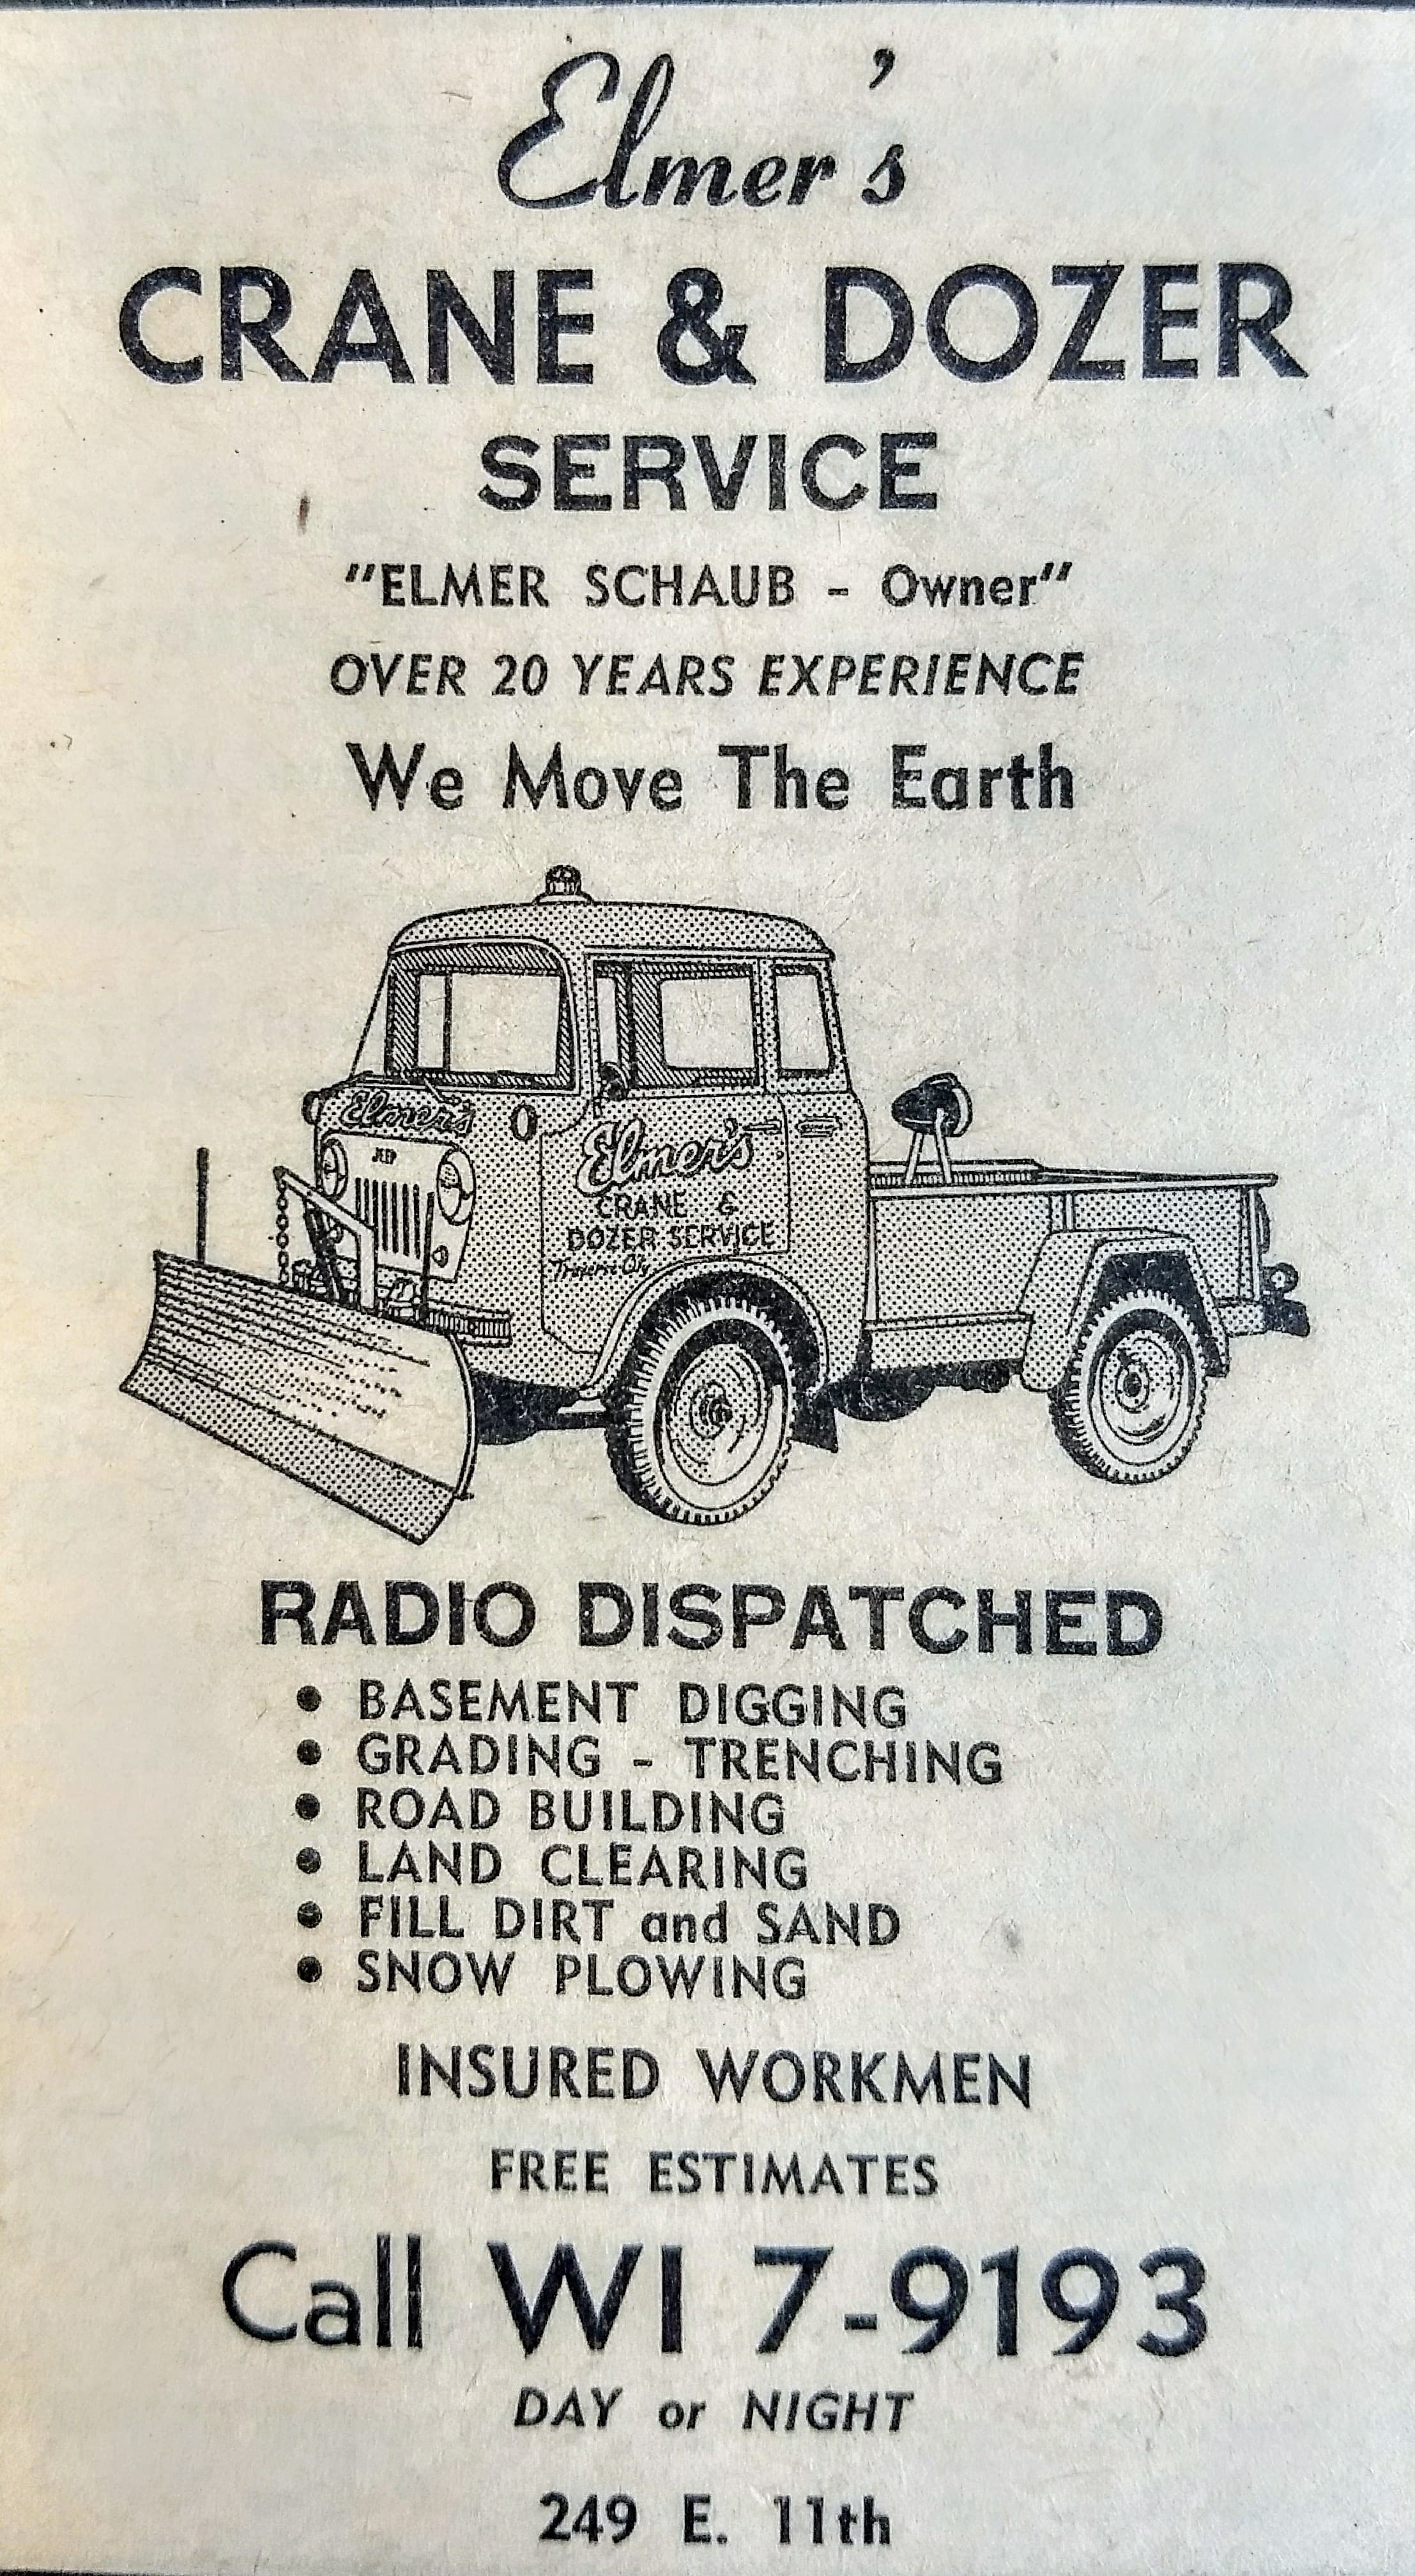 Elmer's Crane and Dozer advertisement in 1960